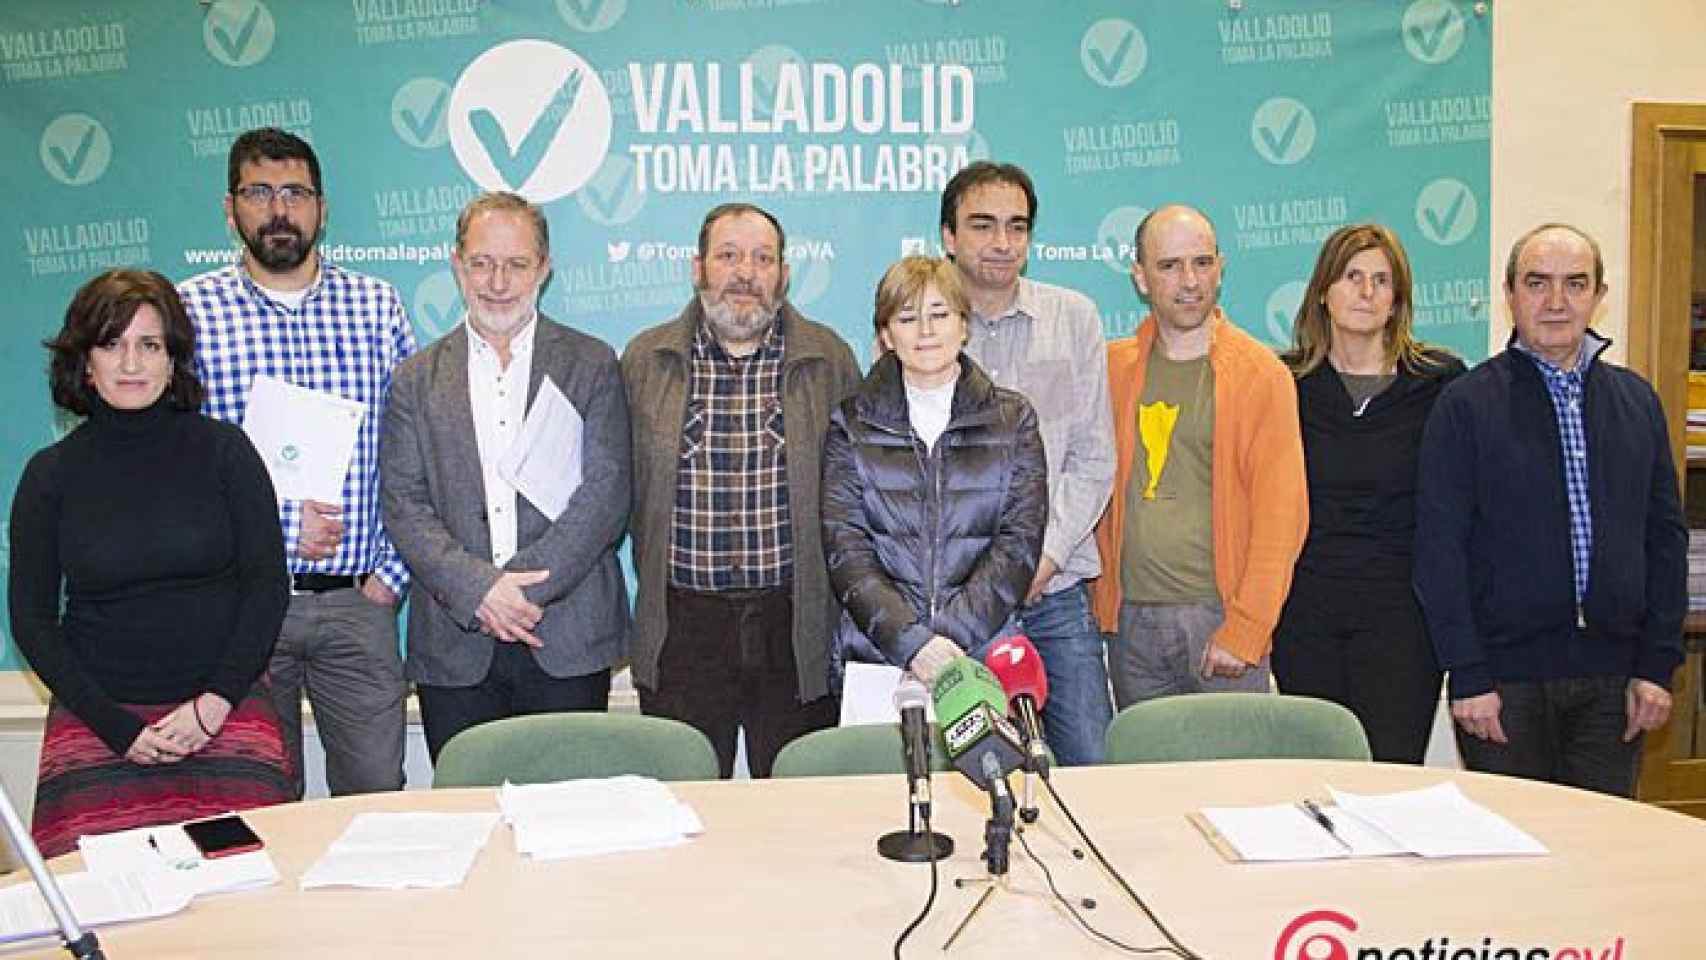 Valladolid-toma-la-palabra-municipalismo